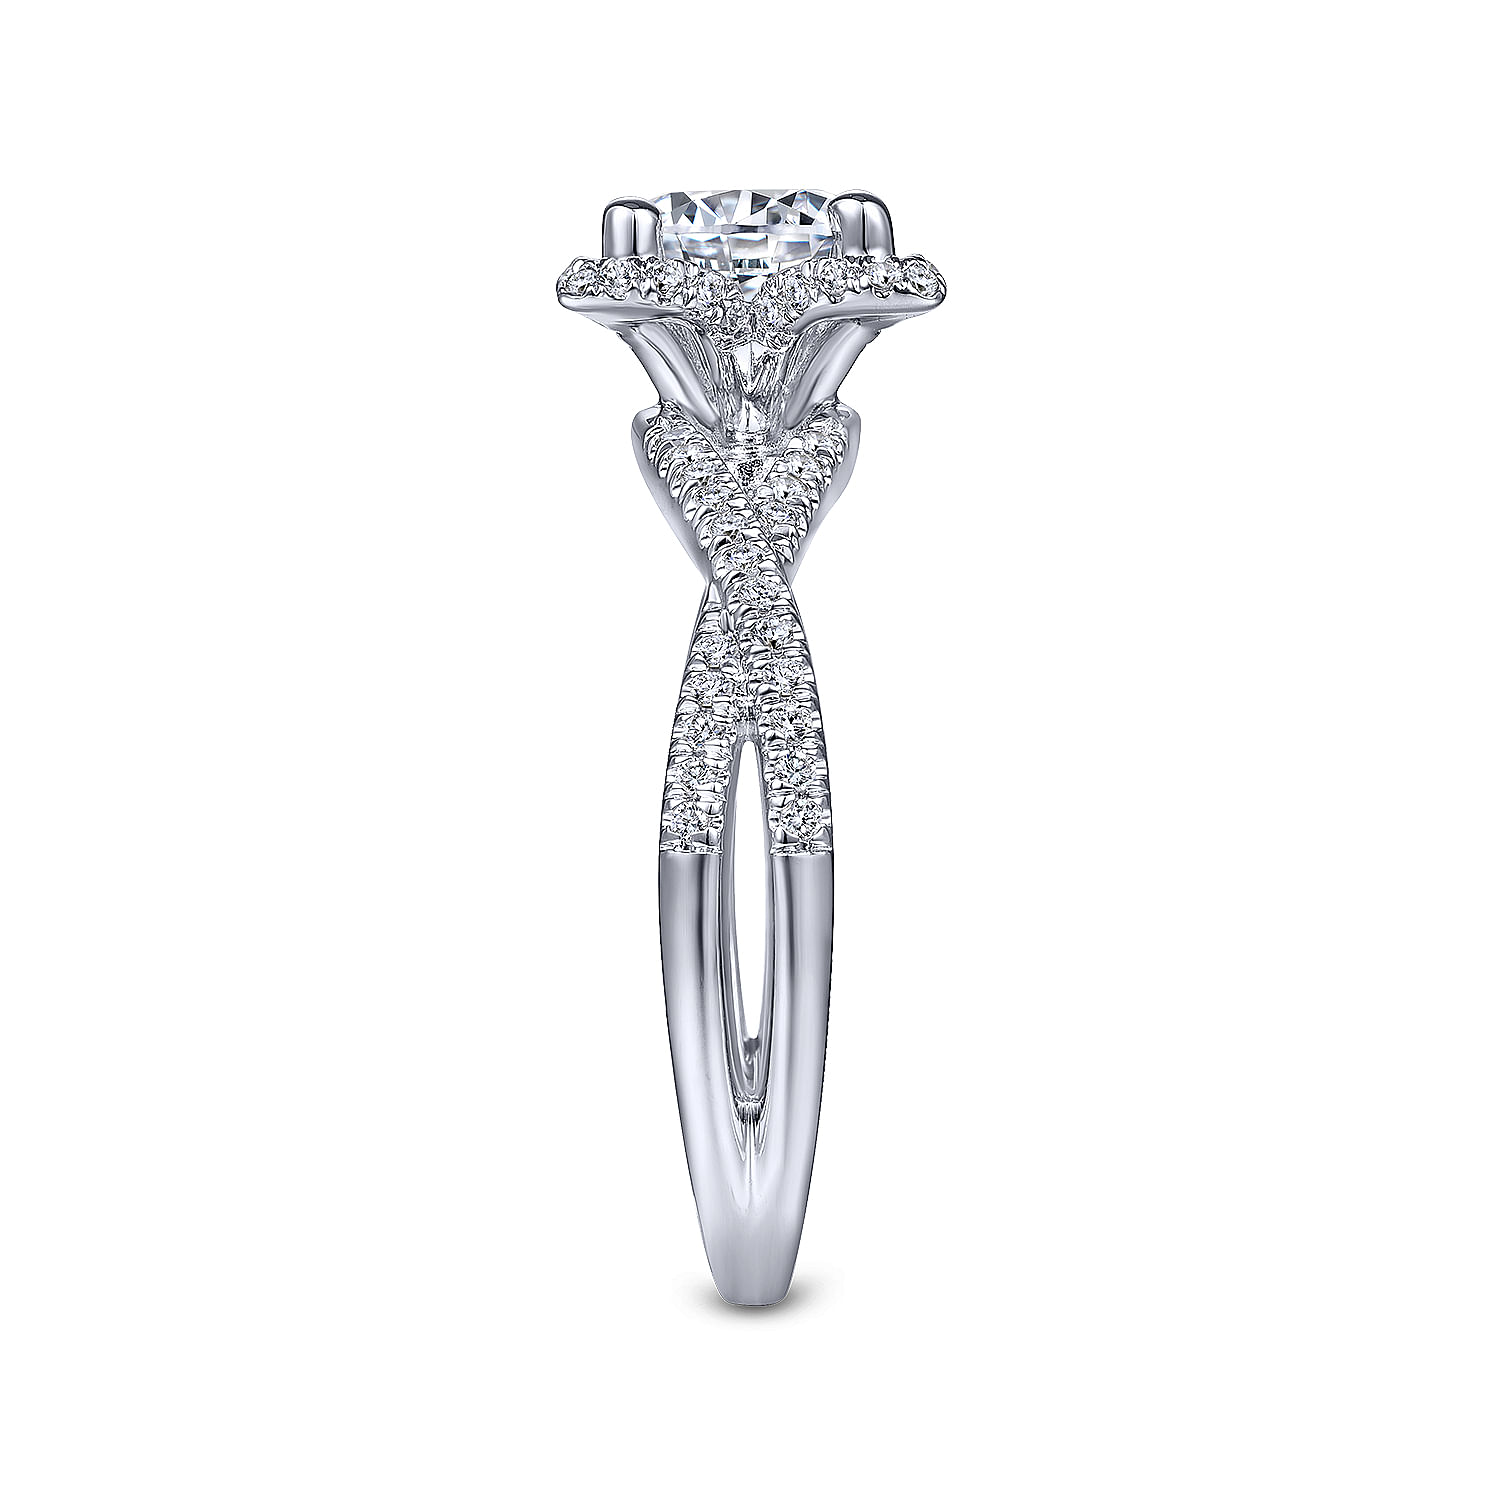 Unique 14K White Gold Halo Diamond Engagement Ring